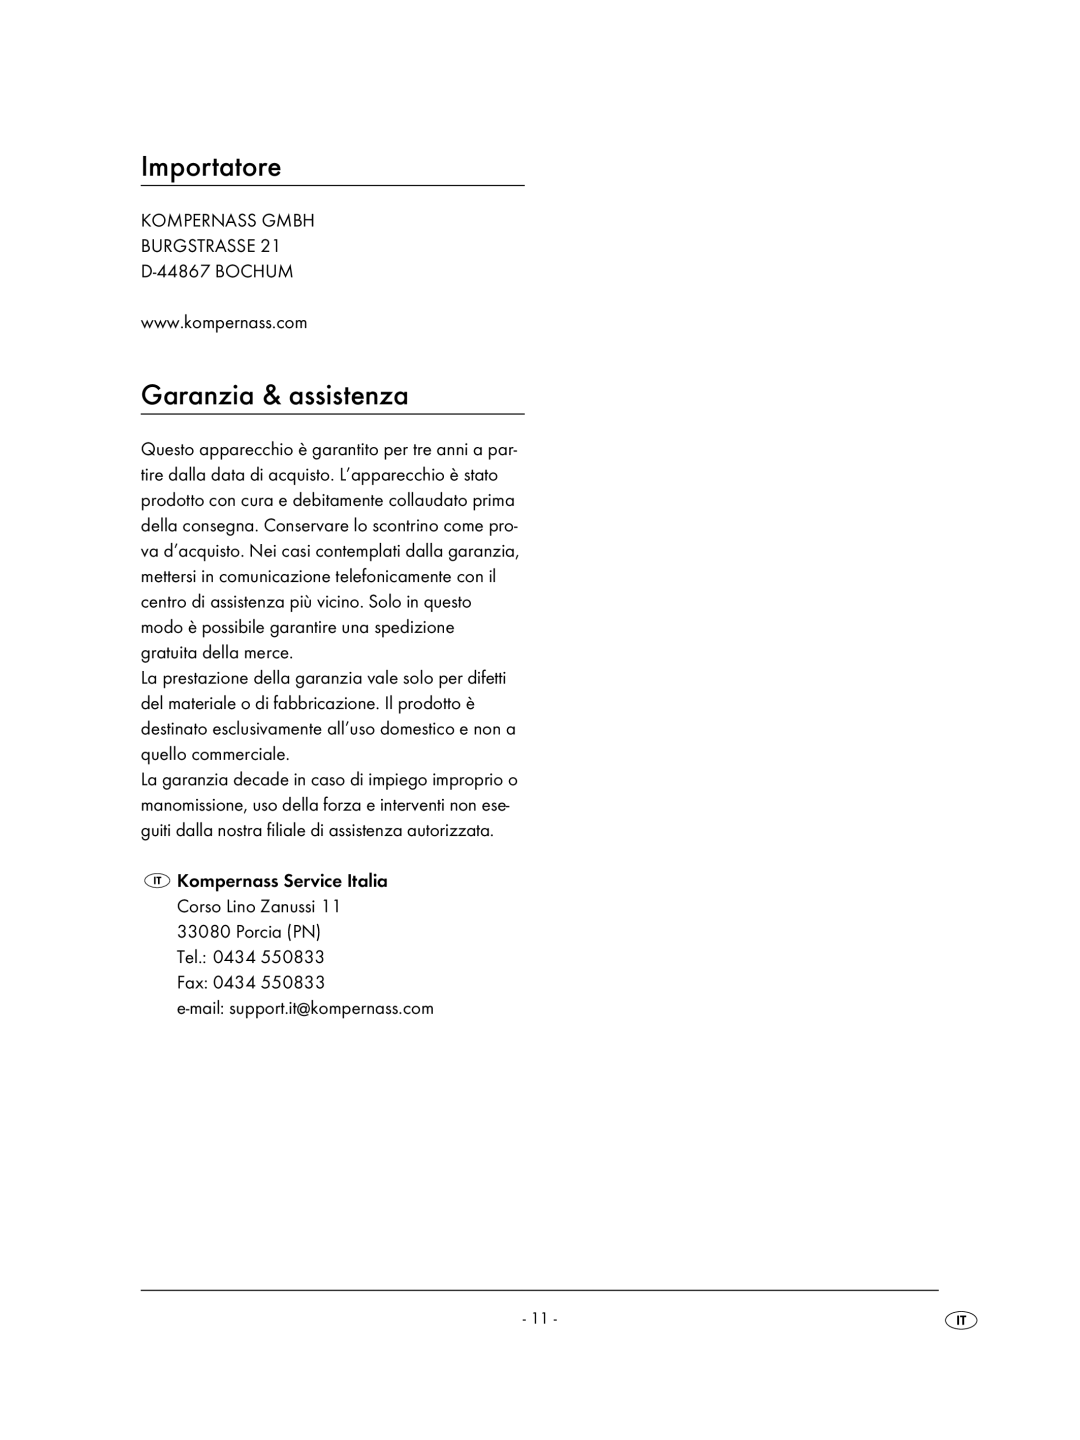 Kompernass KH 2329 manual Importatore, Garanzia & assistenza 